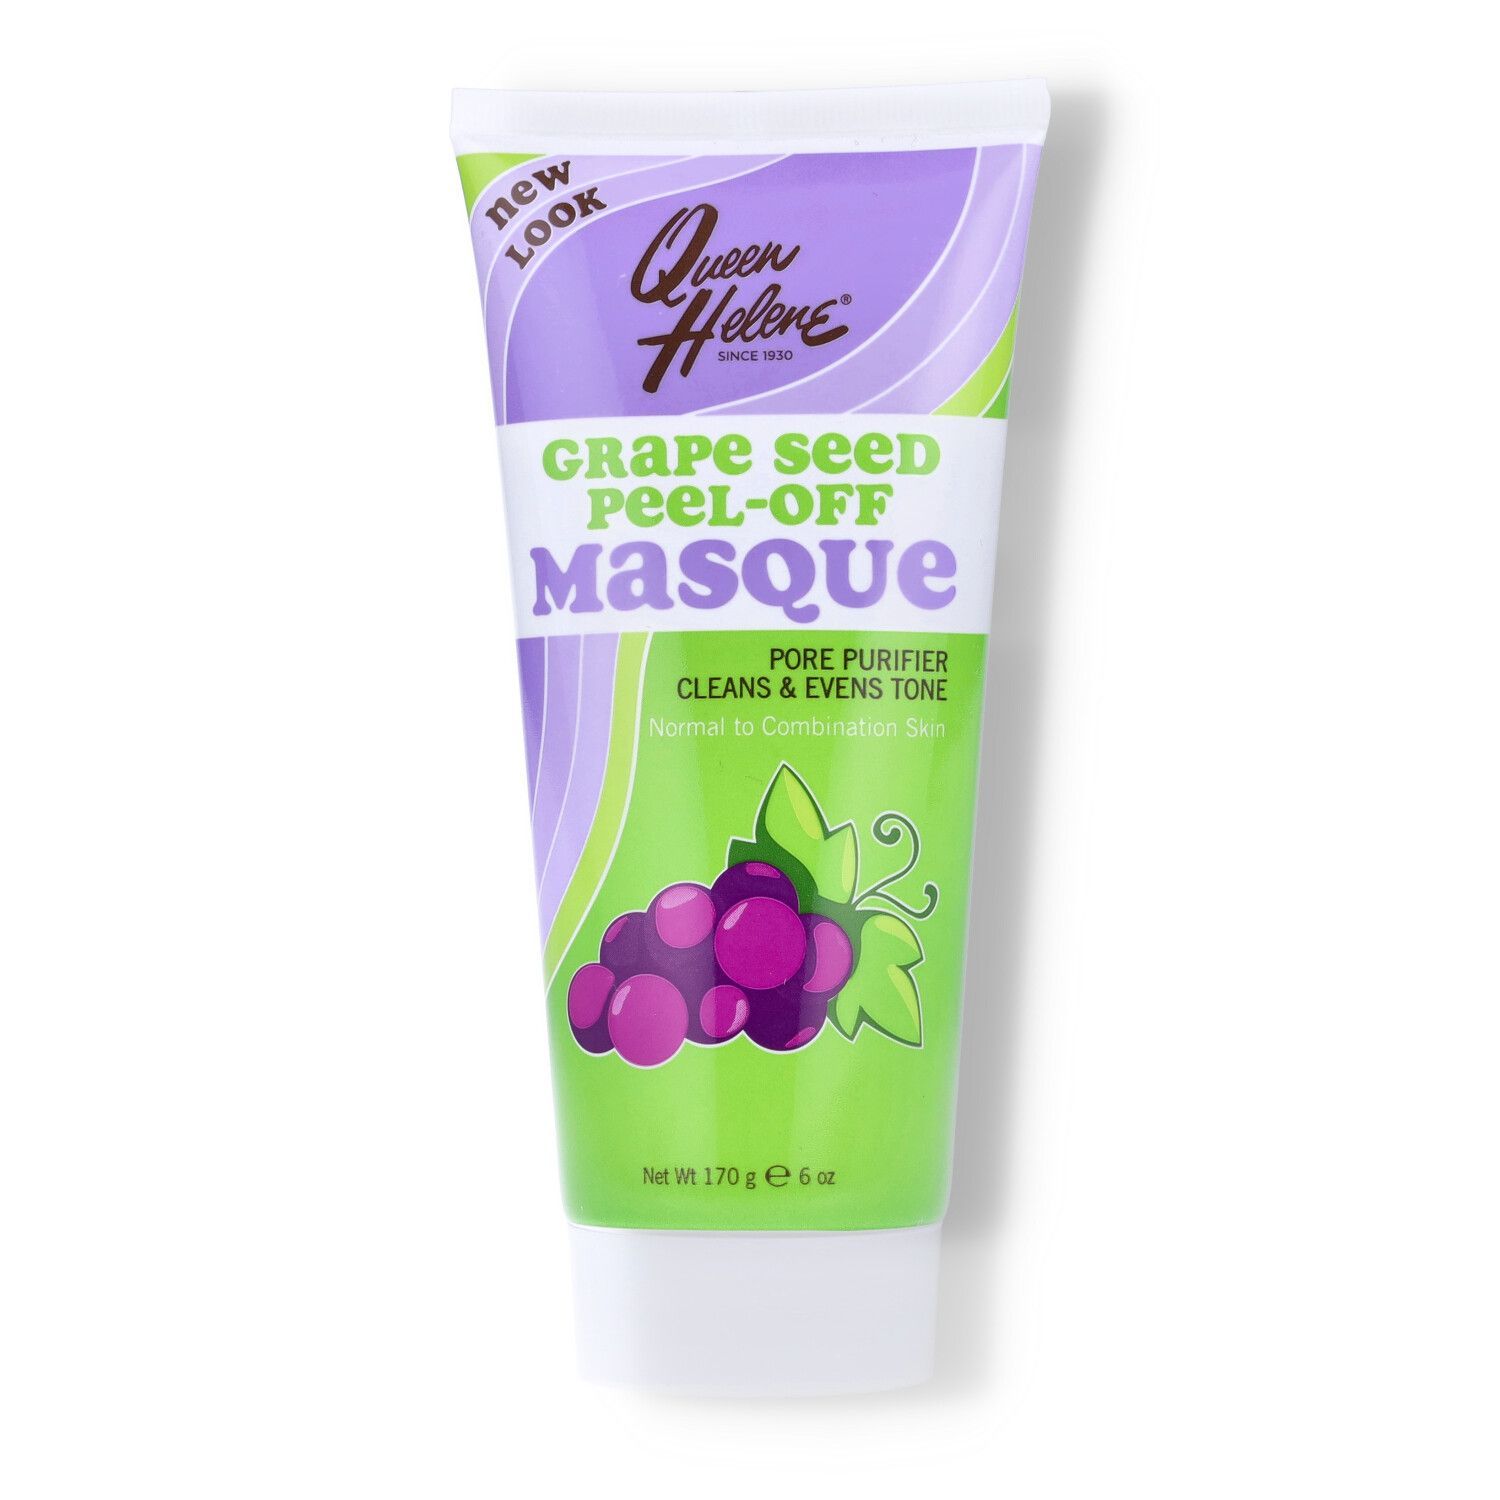 Queen Helene Grape Seed Extract Peel-off Masque - 6oz